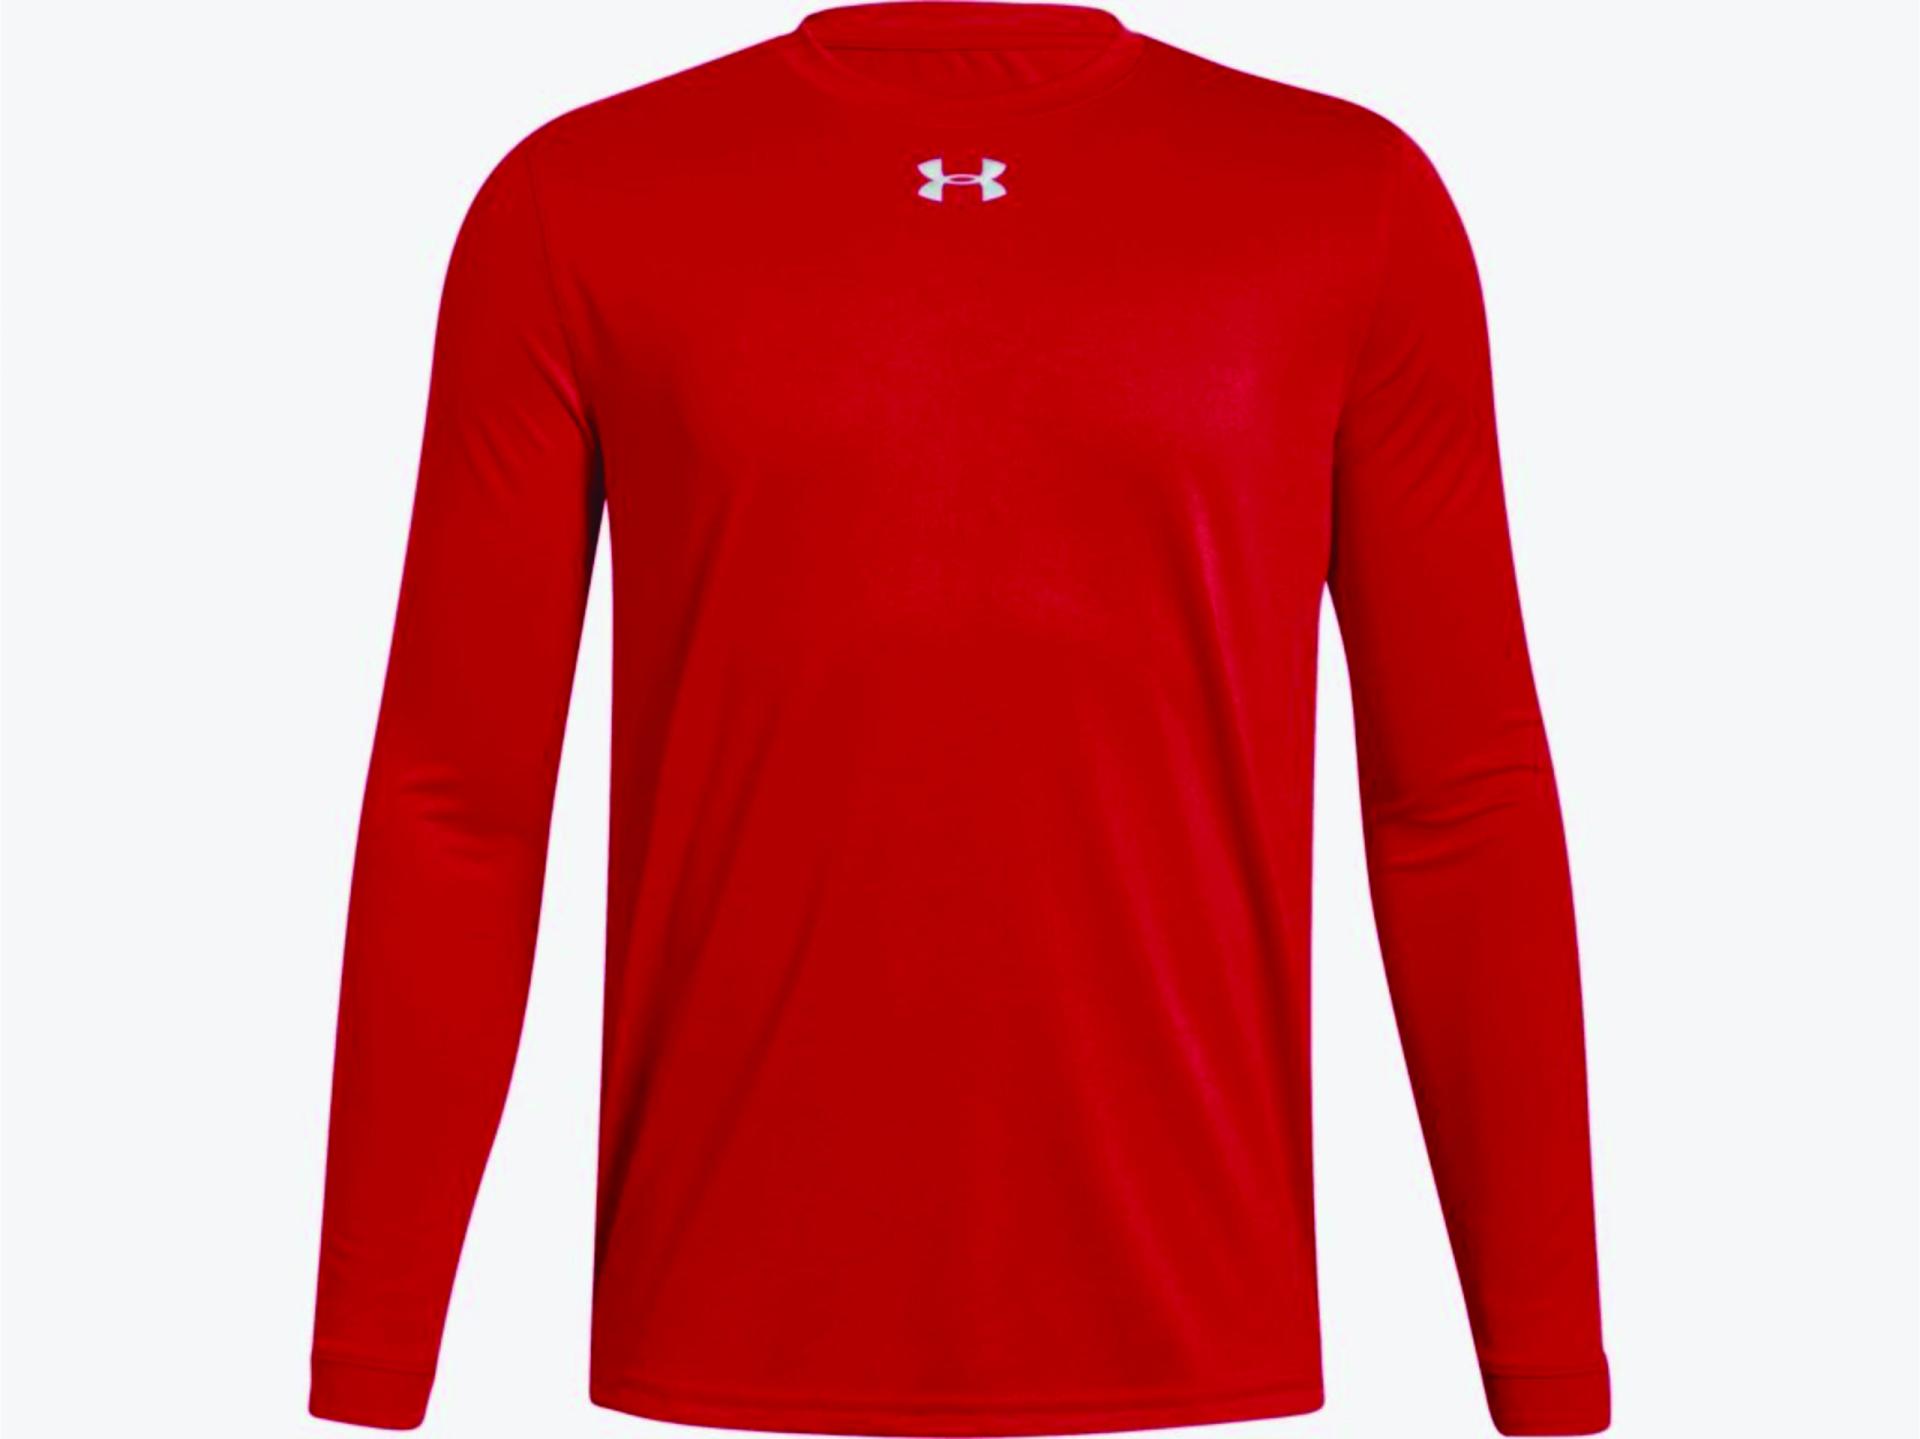 UnderArmour Locker Long Sleeve Youth — Pro Sport Clothing Company ...